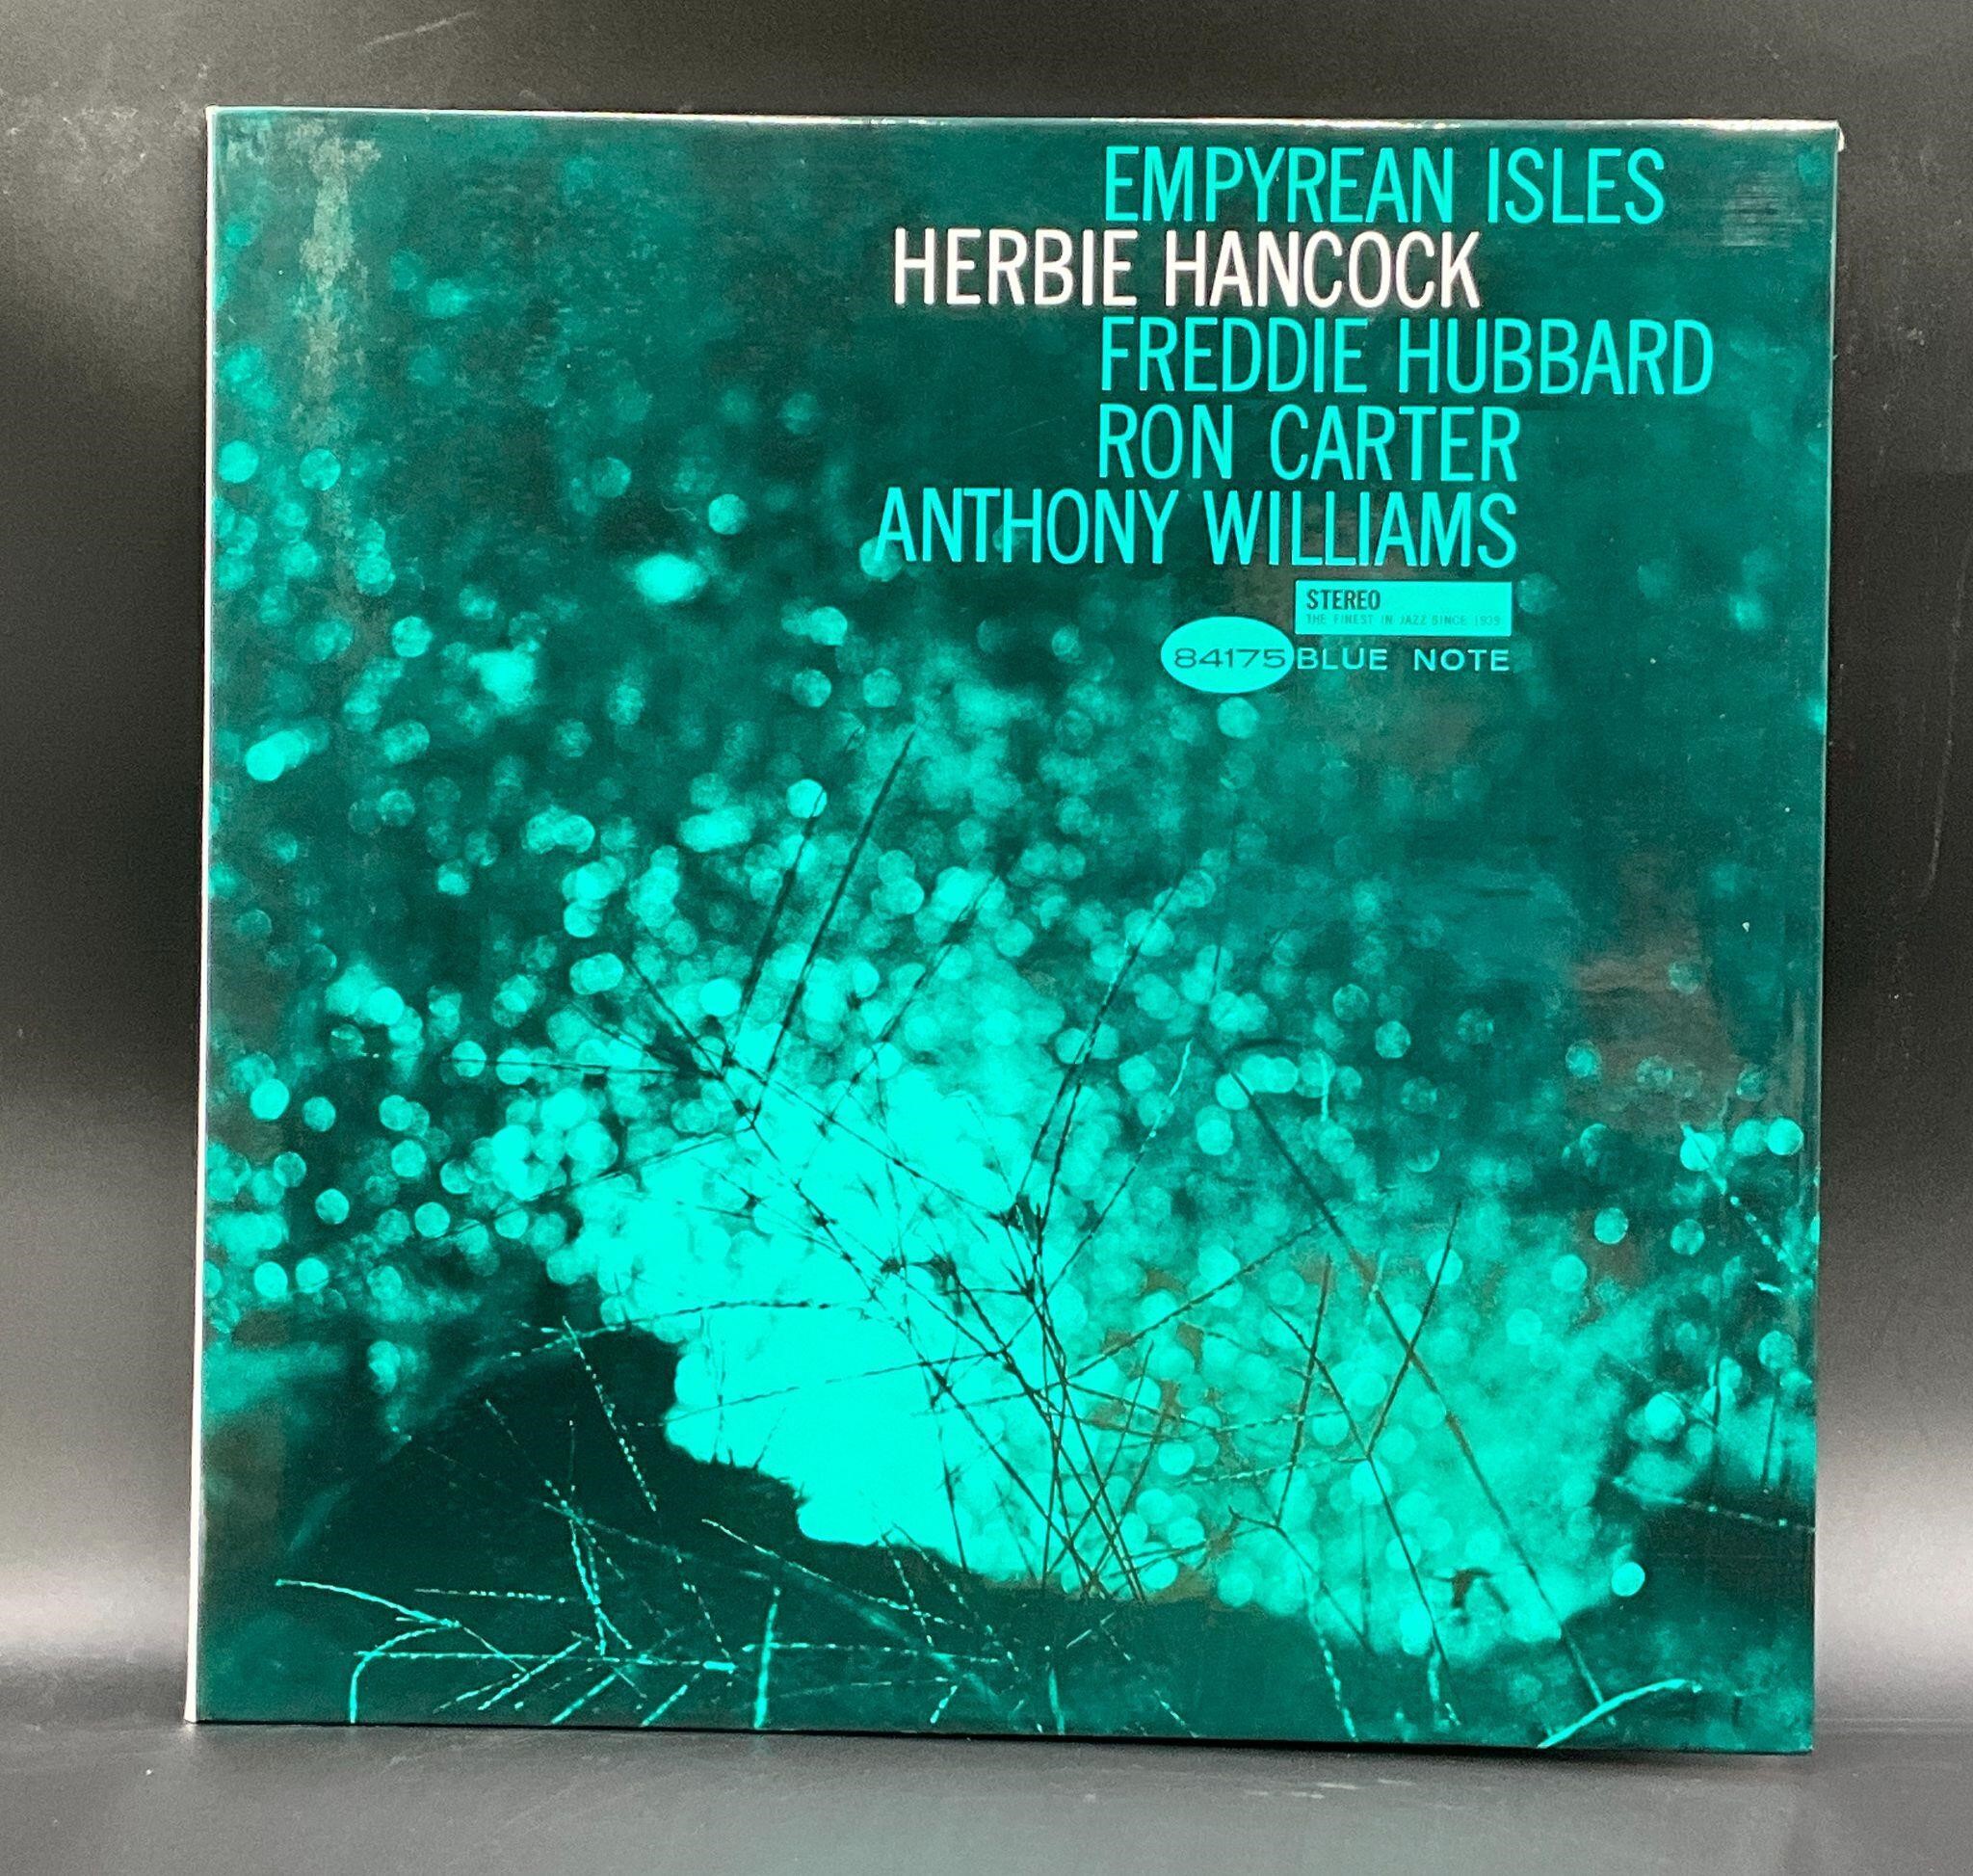 2015 Herbie Hancock "Empyrean Isles" Reissue LP